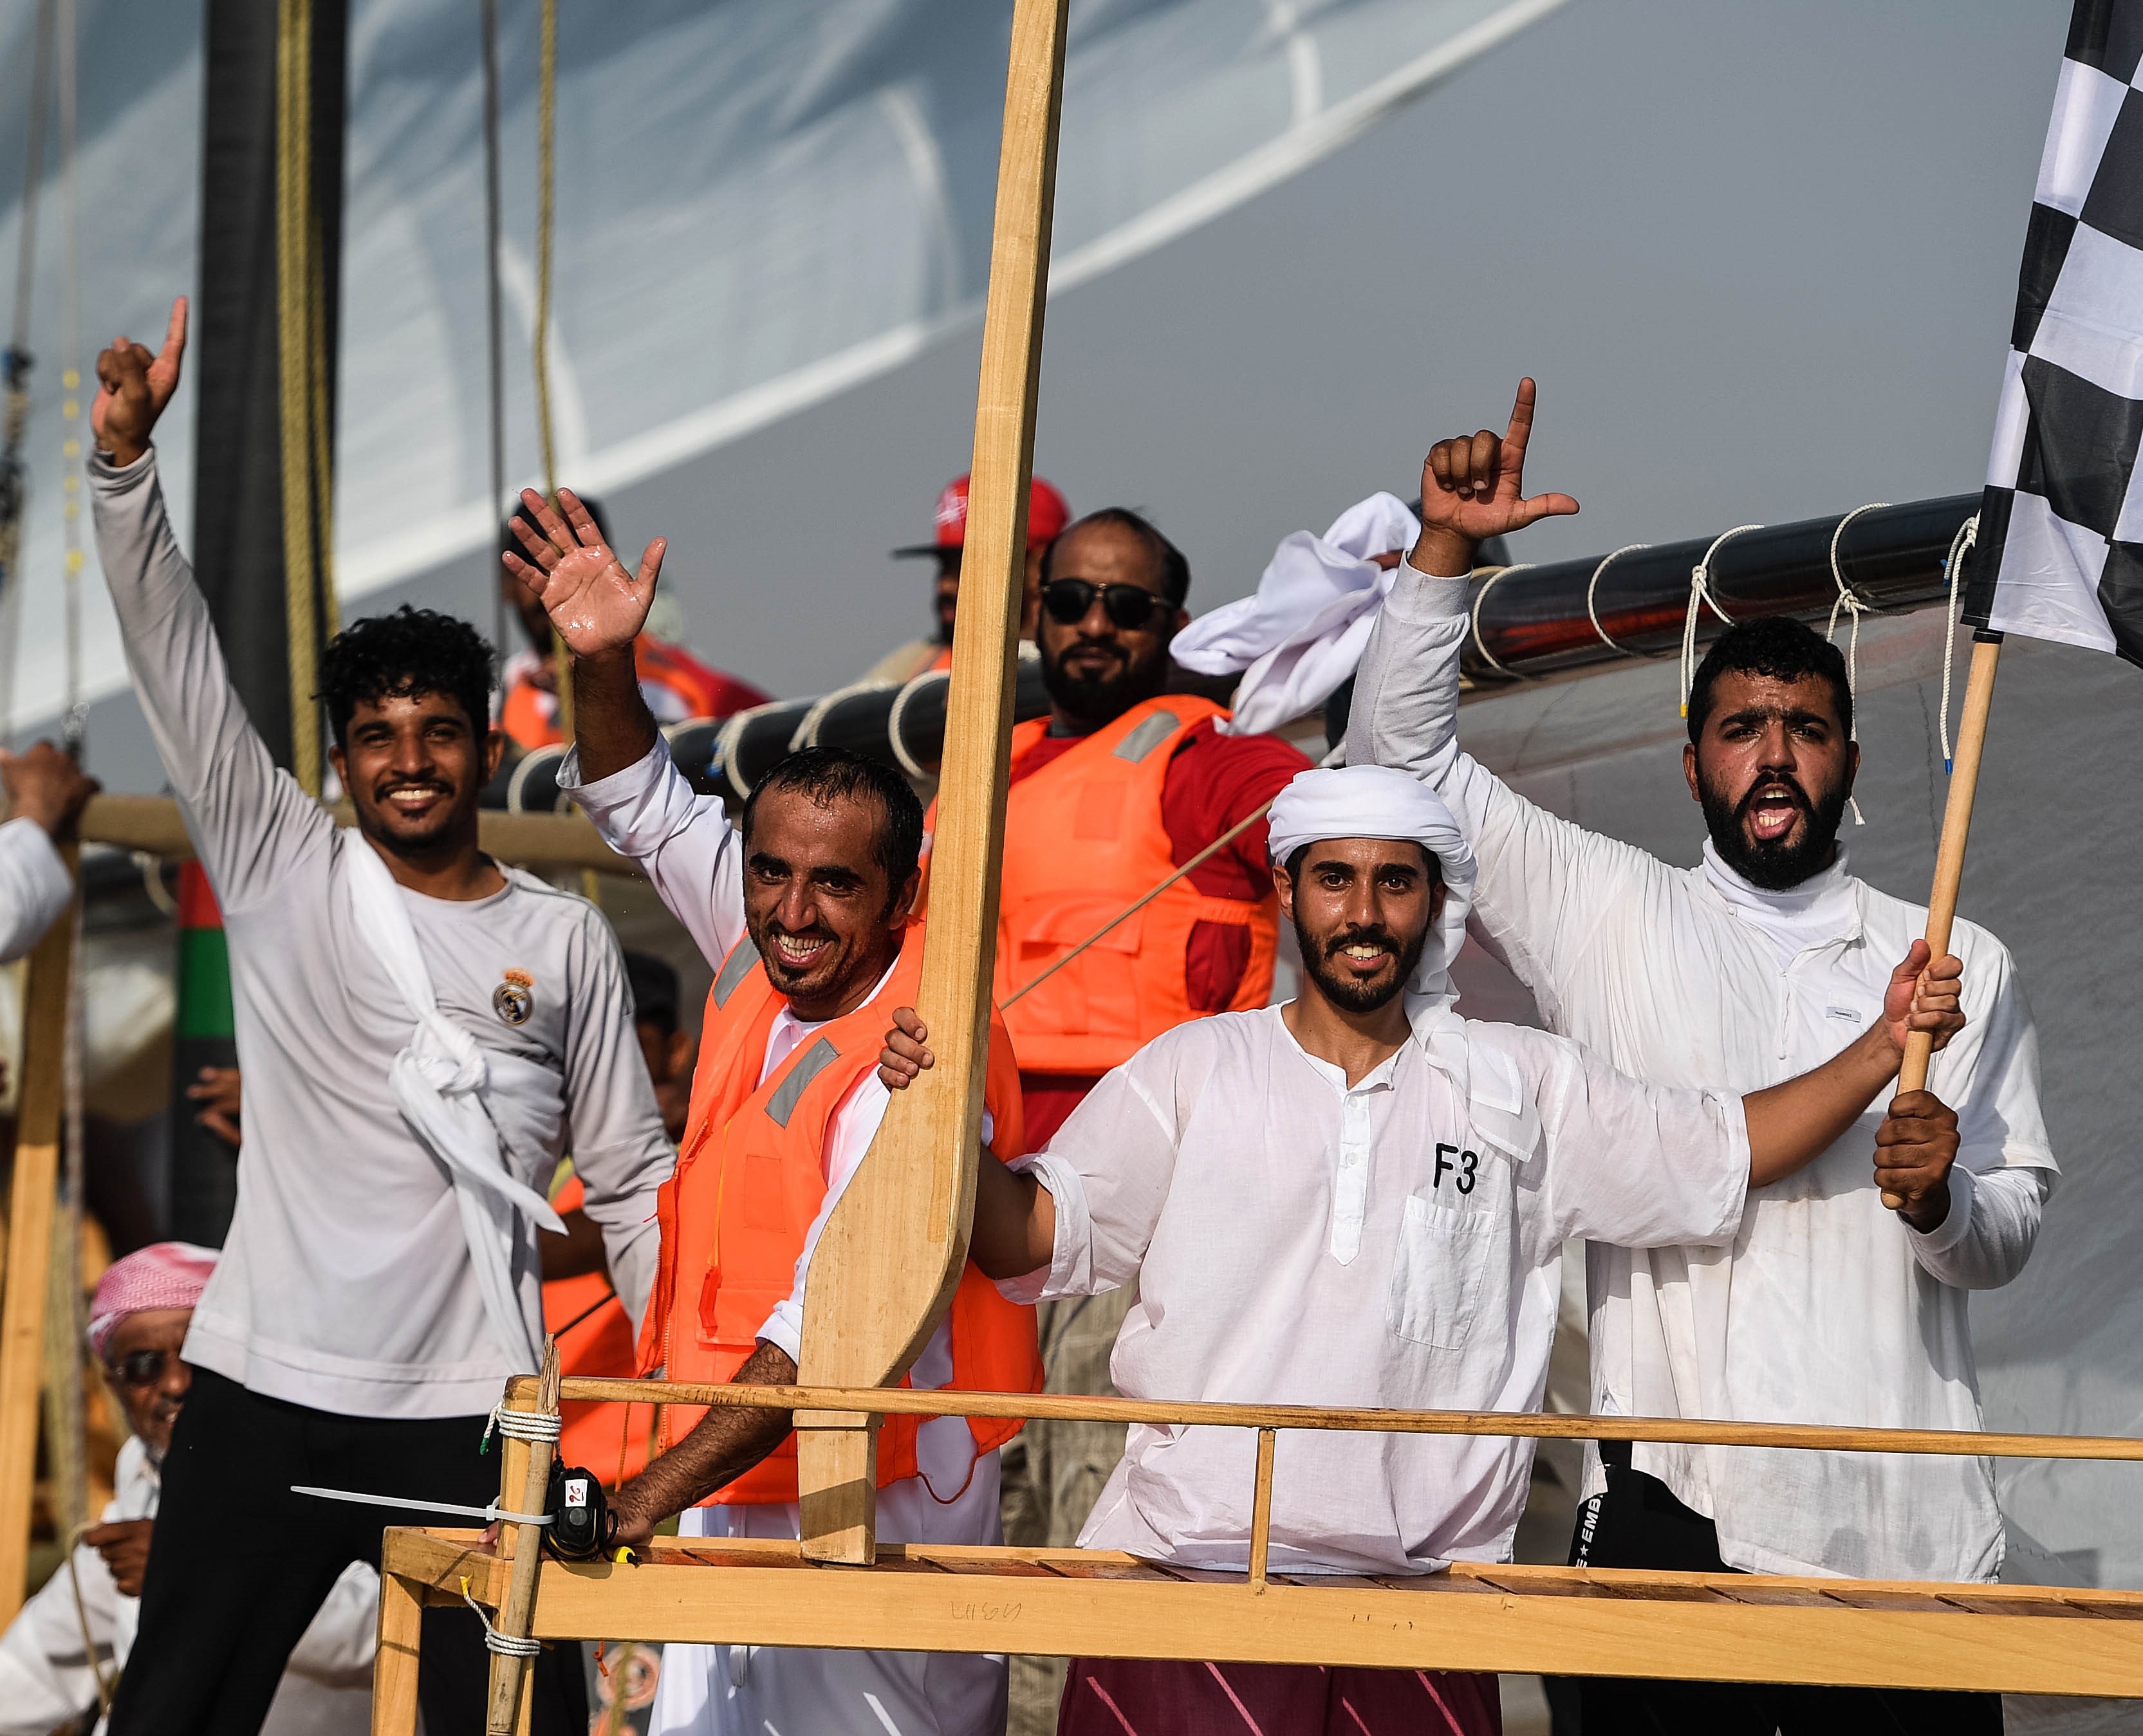 Al Shaqi 96 is the Season Champion for 60ft Dubai Traditional Dhow Sailing Race